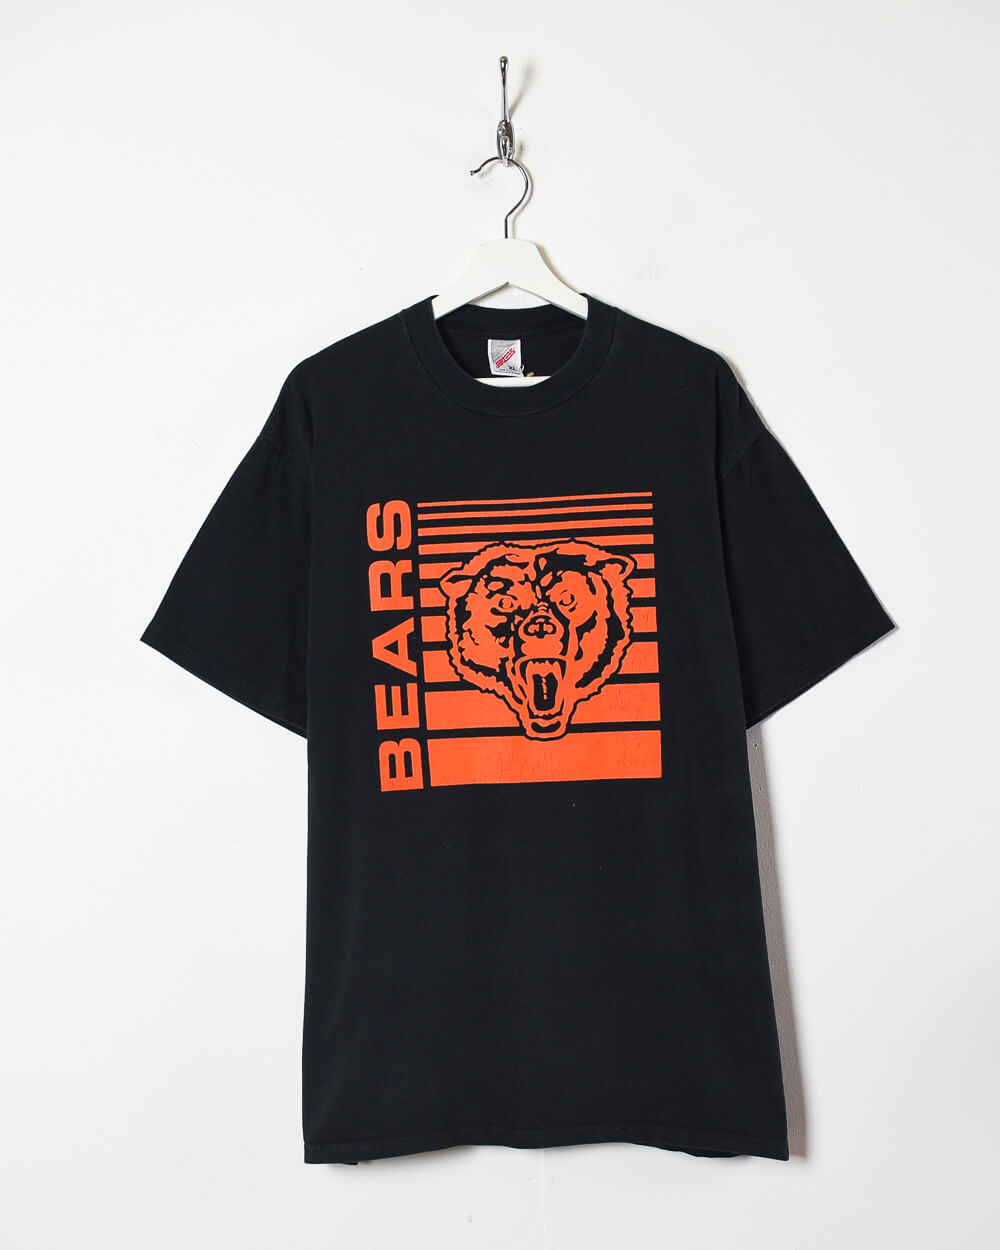 Black Jerzees Chicago Bears T-Shirt - X-Large